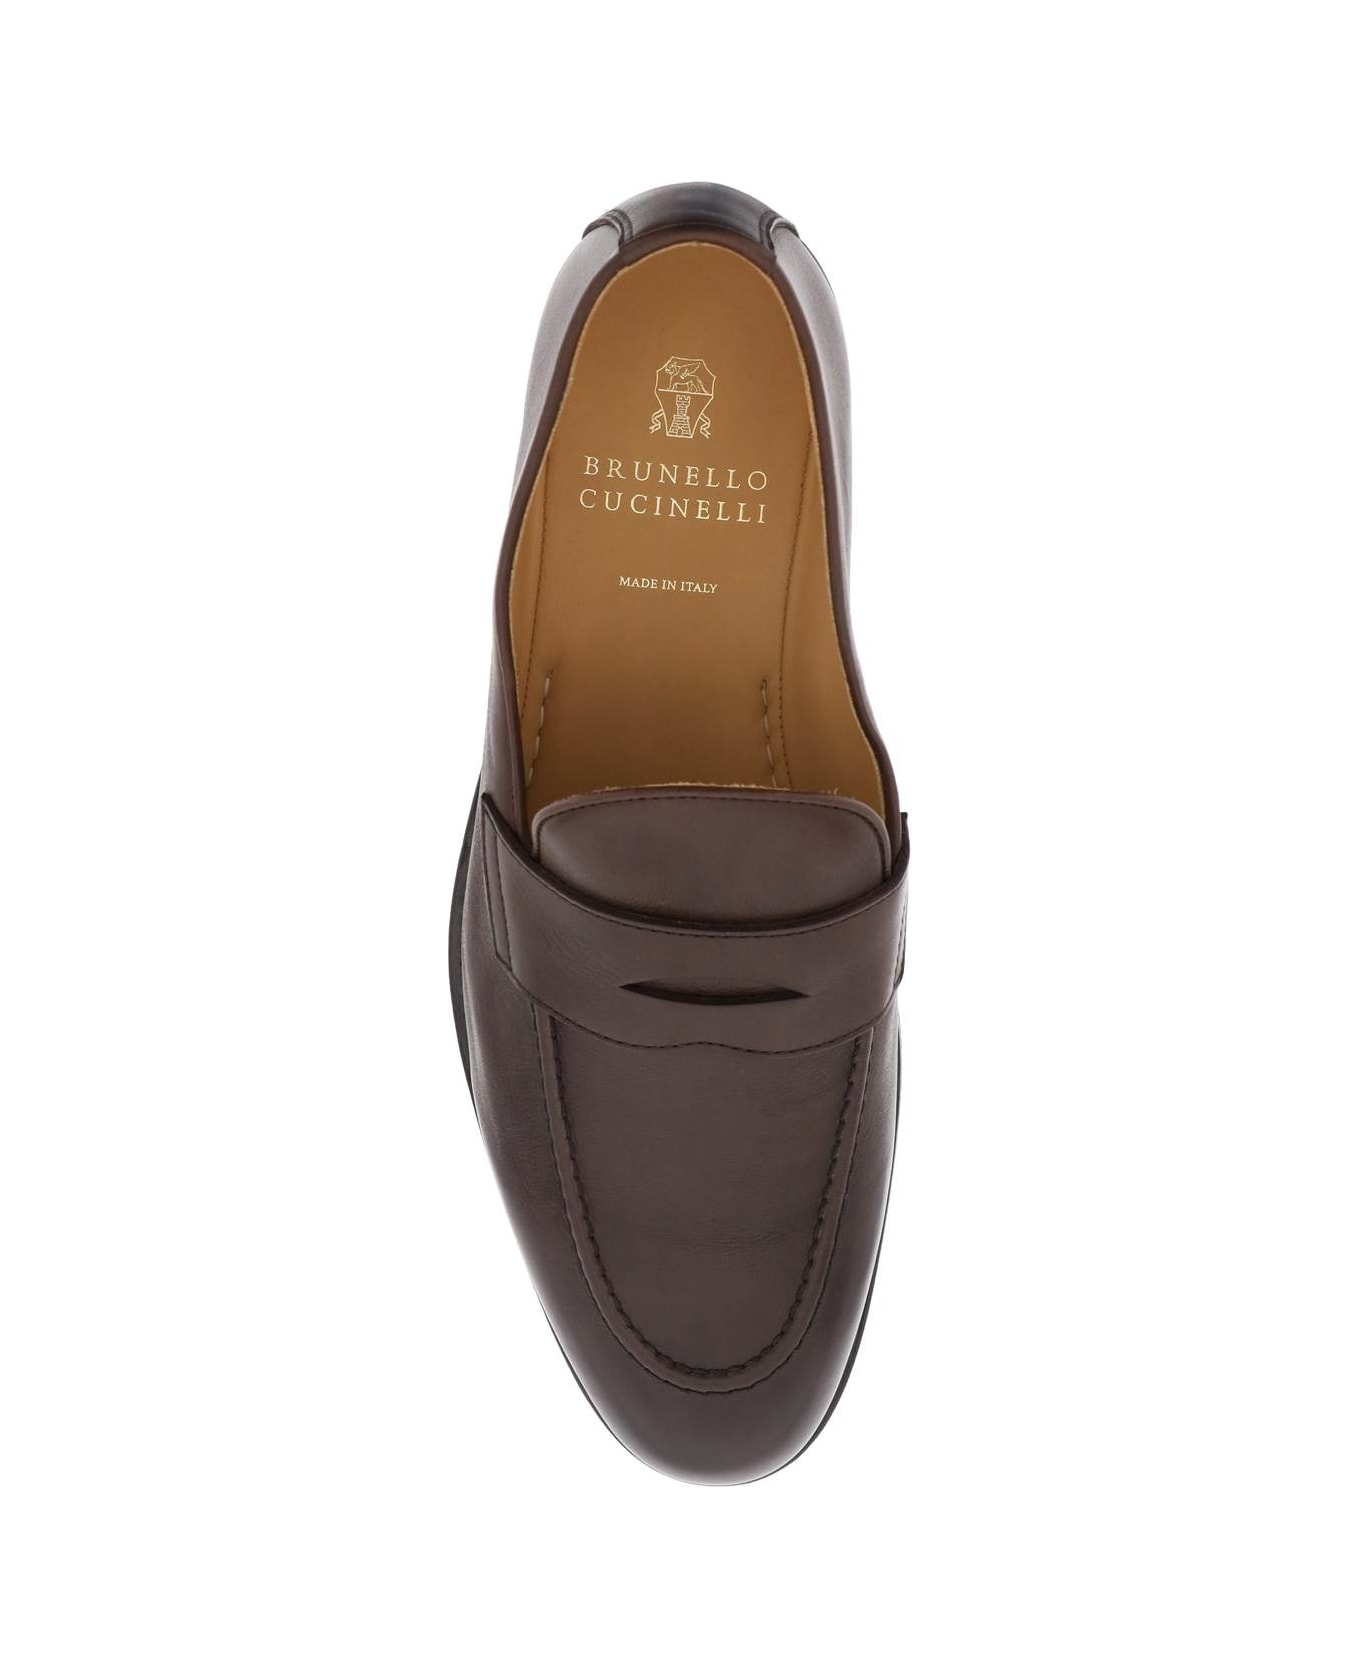 Brunello Cucinelli Leather Penny Loafers - ESPRESSO (Brown)